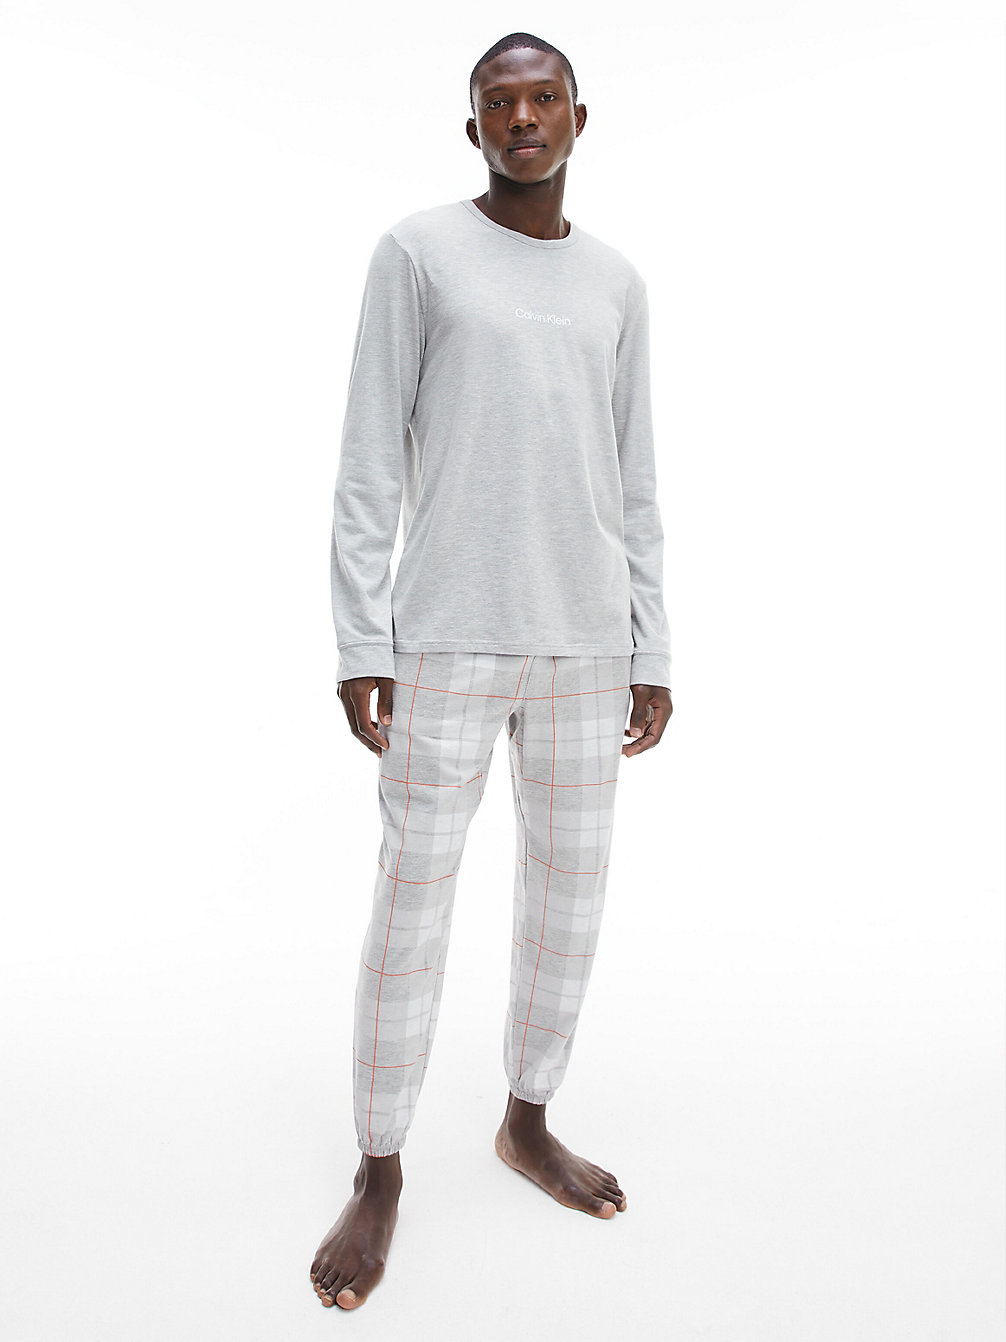 GREY H TOP, GRAPHIC PLAID BOTTOM Pants Pyjamas Set - Modern Structure undefined men Calvin Klein